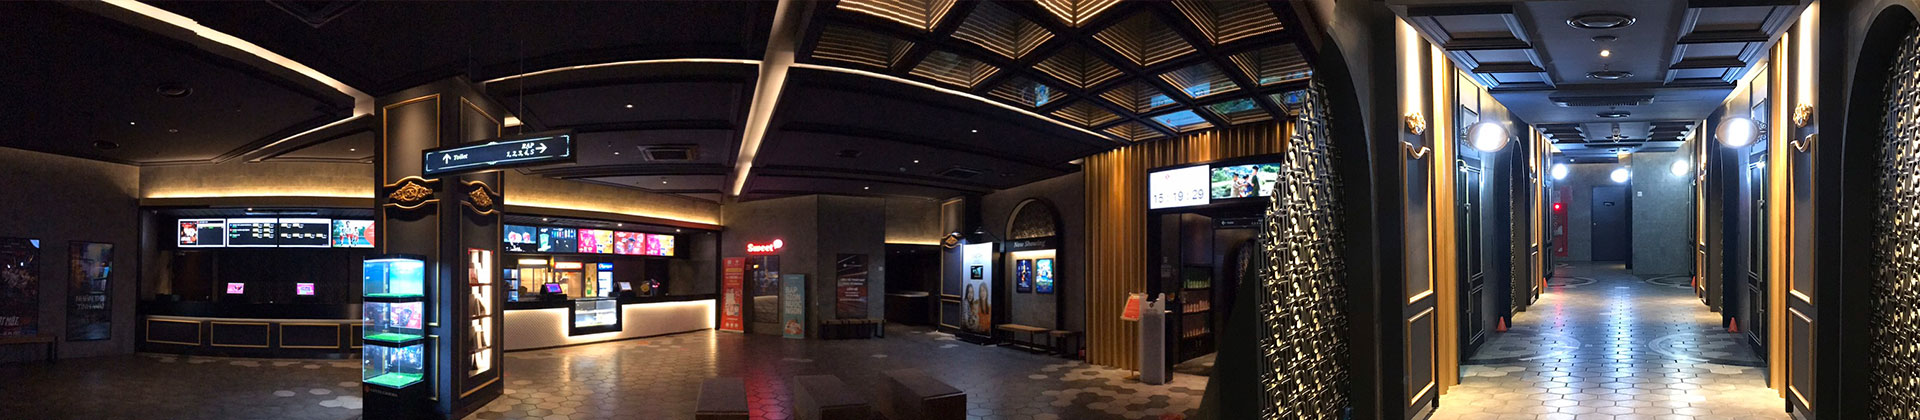 Các rạp Lotte Cinema ở TPHCM